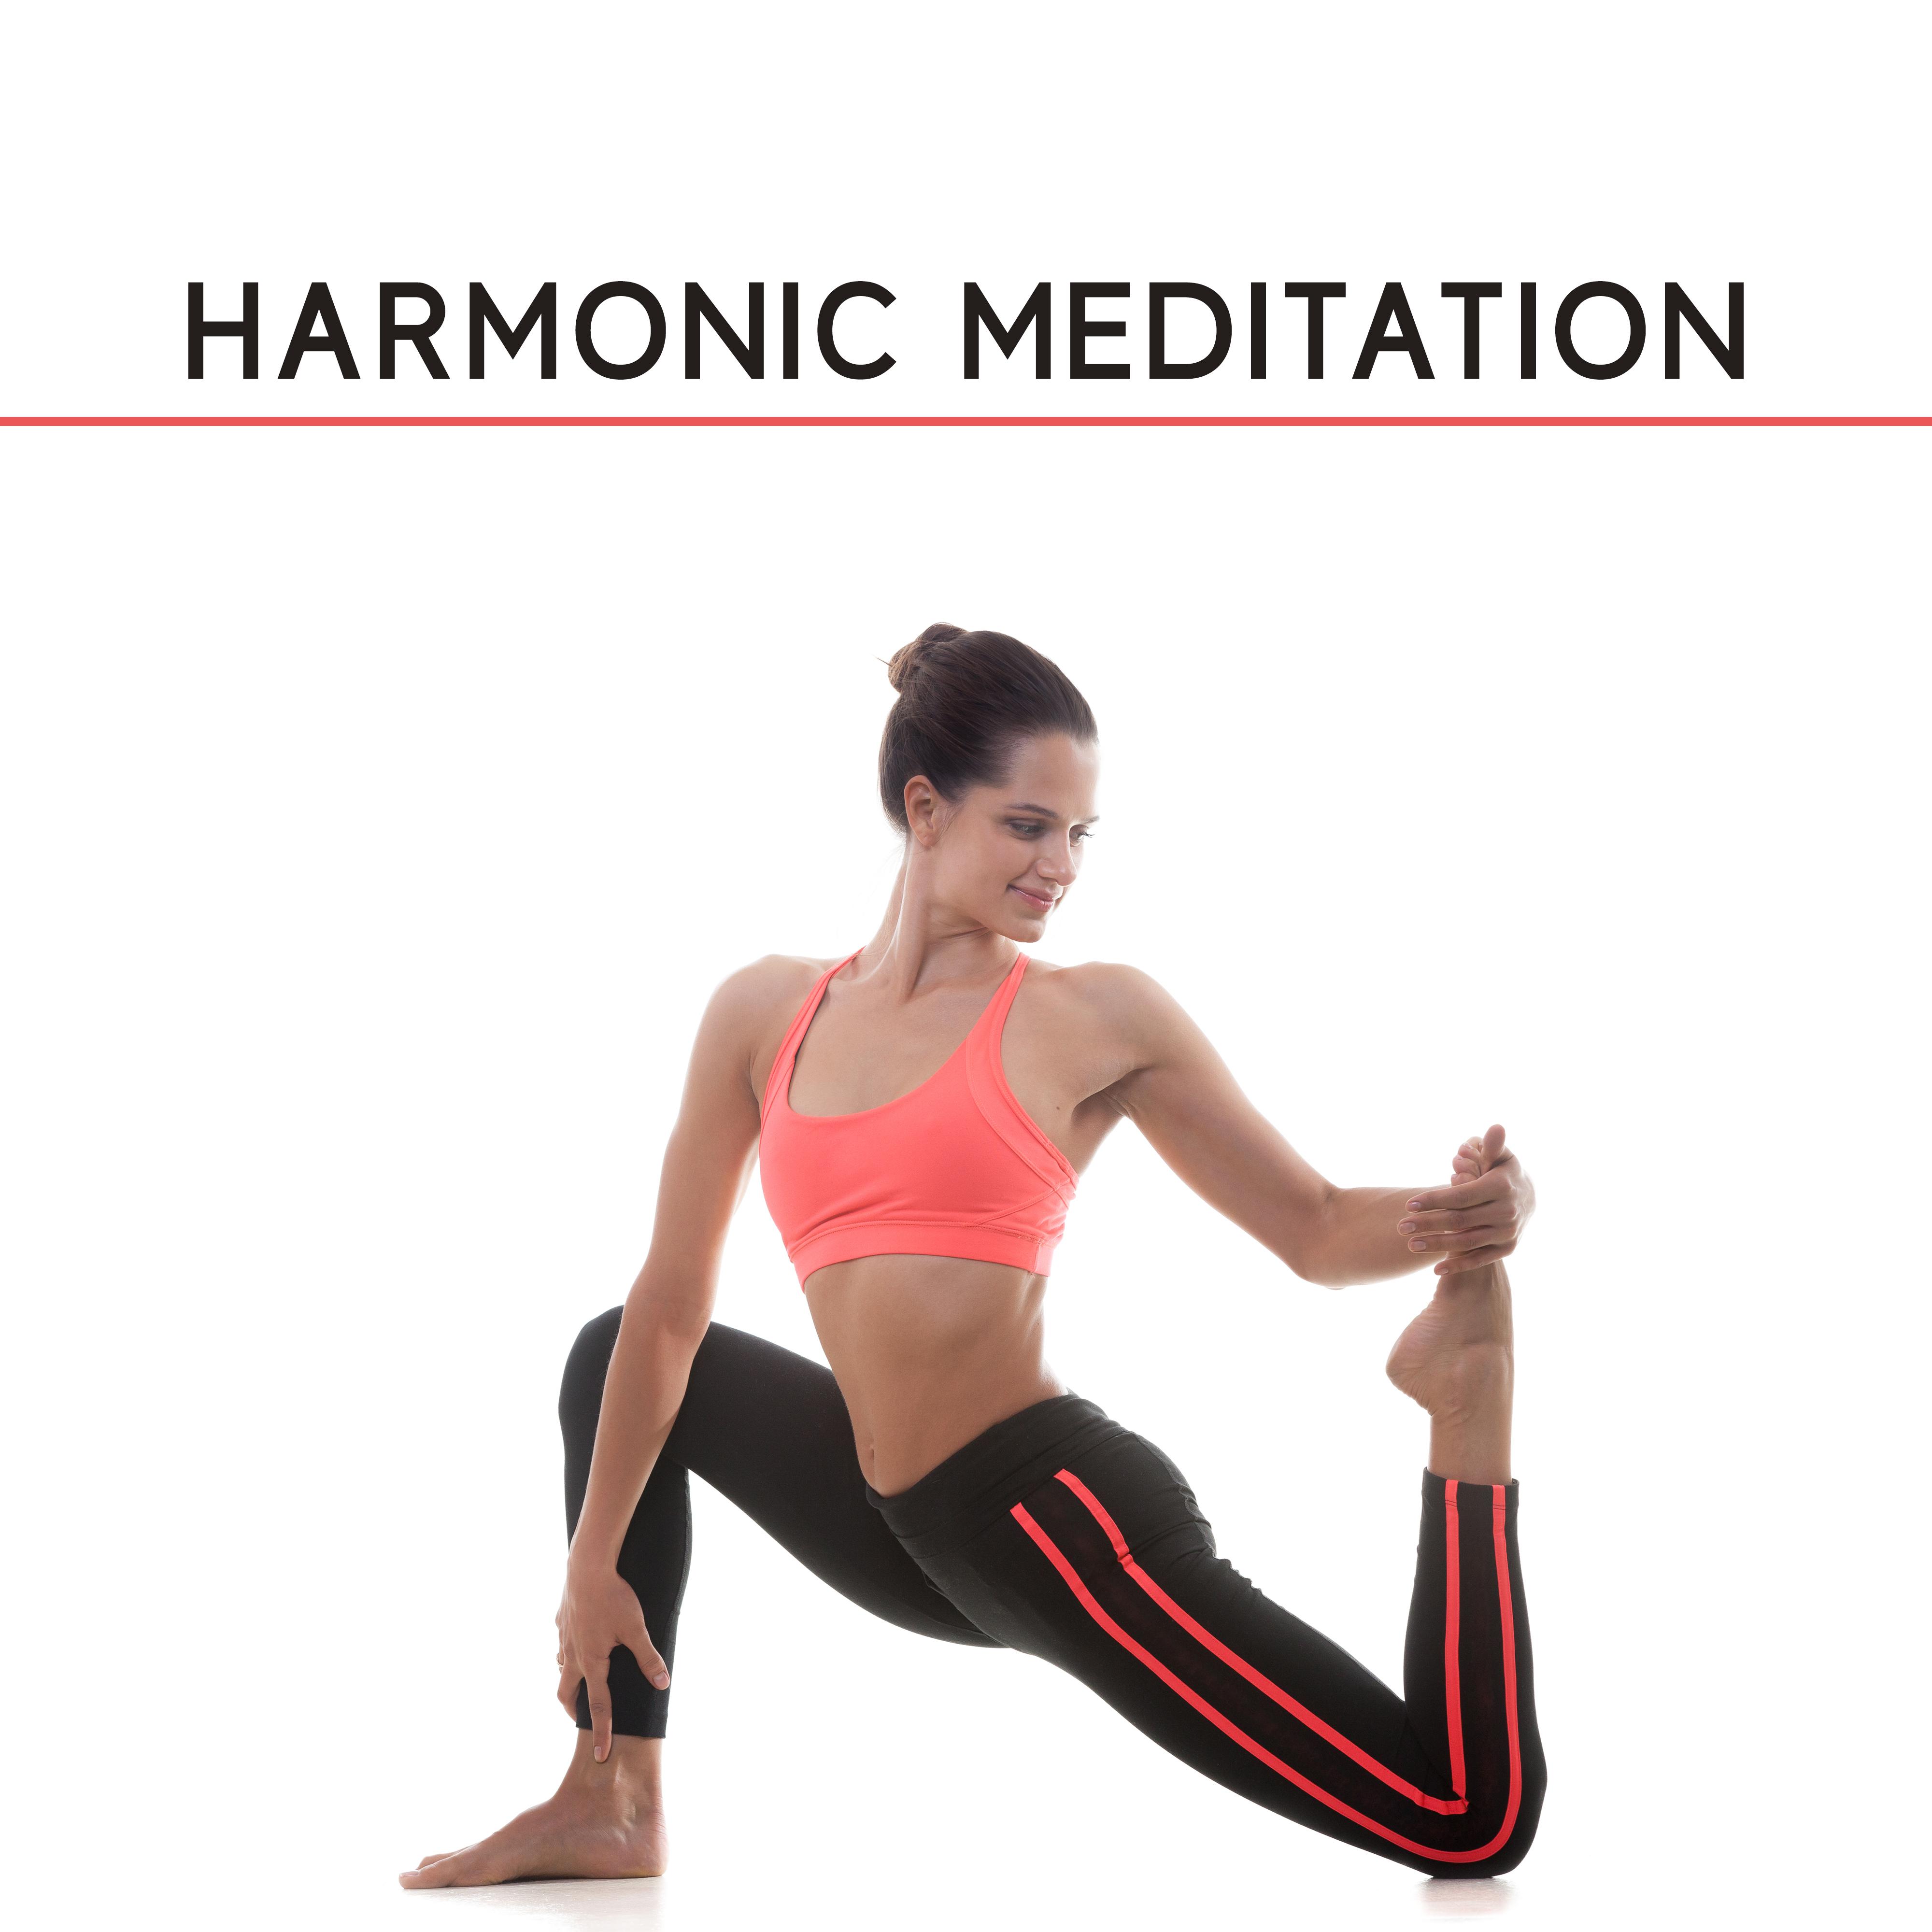 Harmonic Meditation